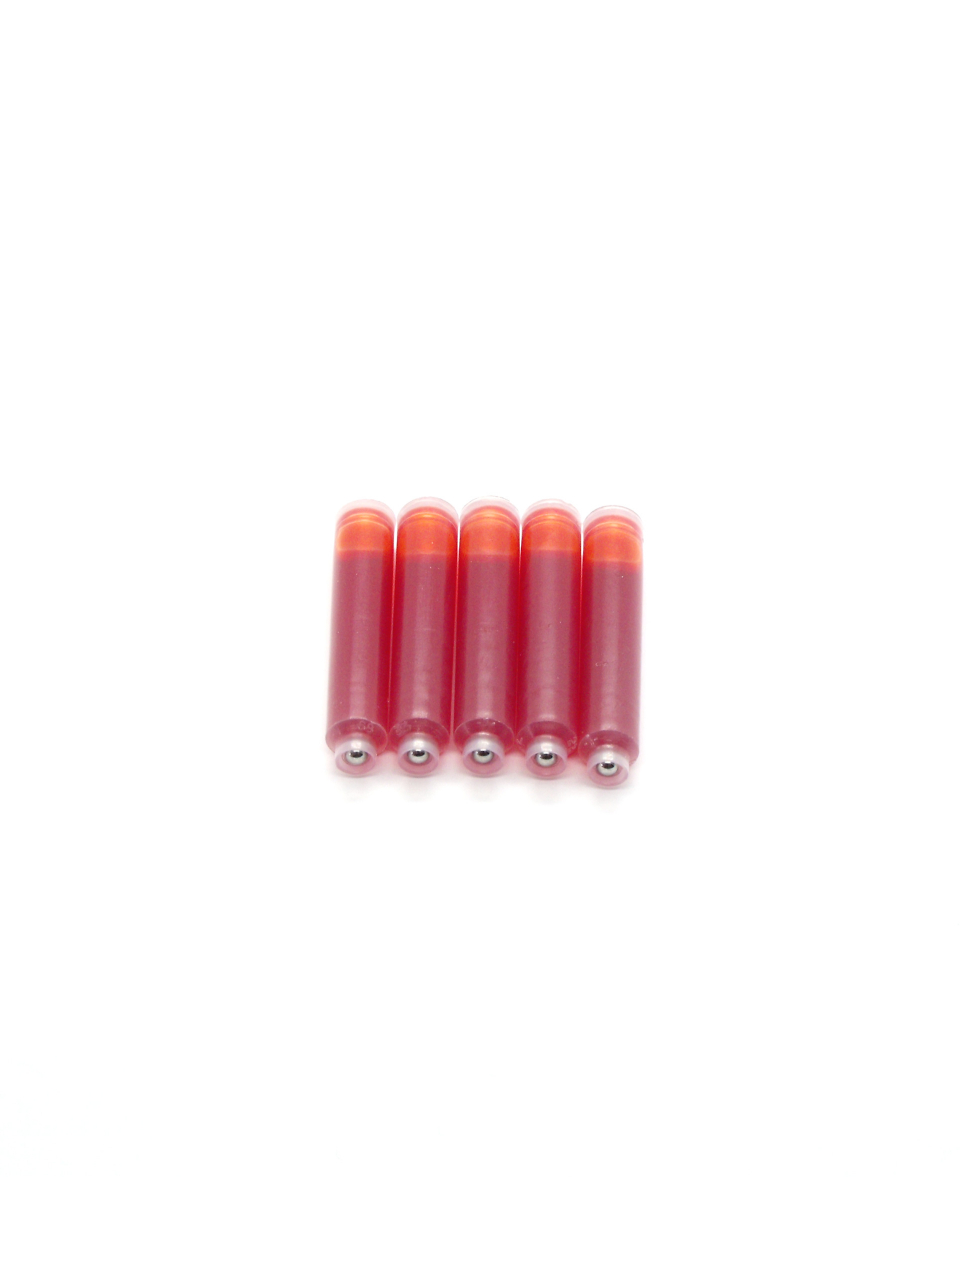 Top Ink Cartridges For Levenger Fountain Pens (Orange)